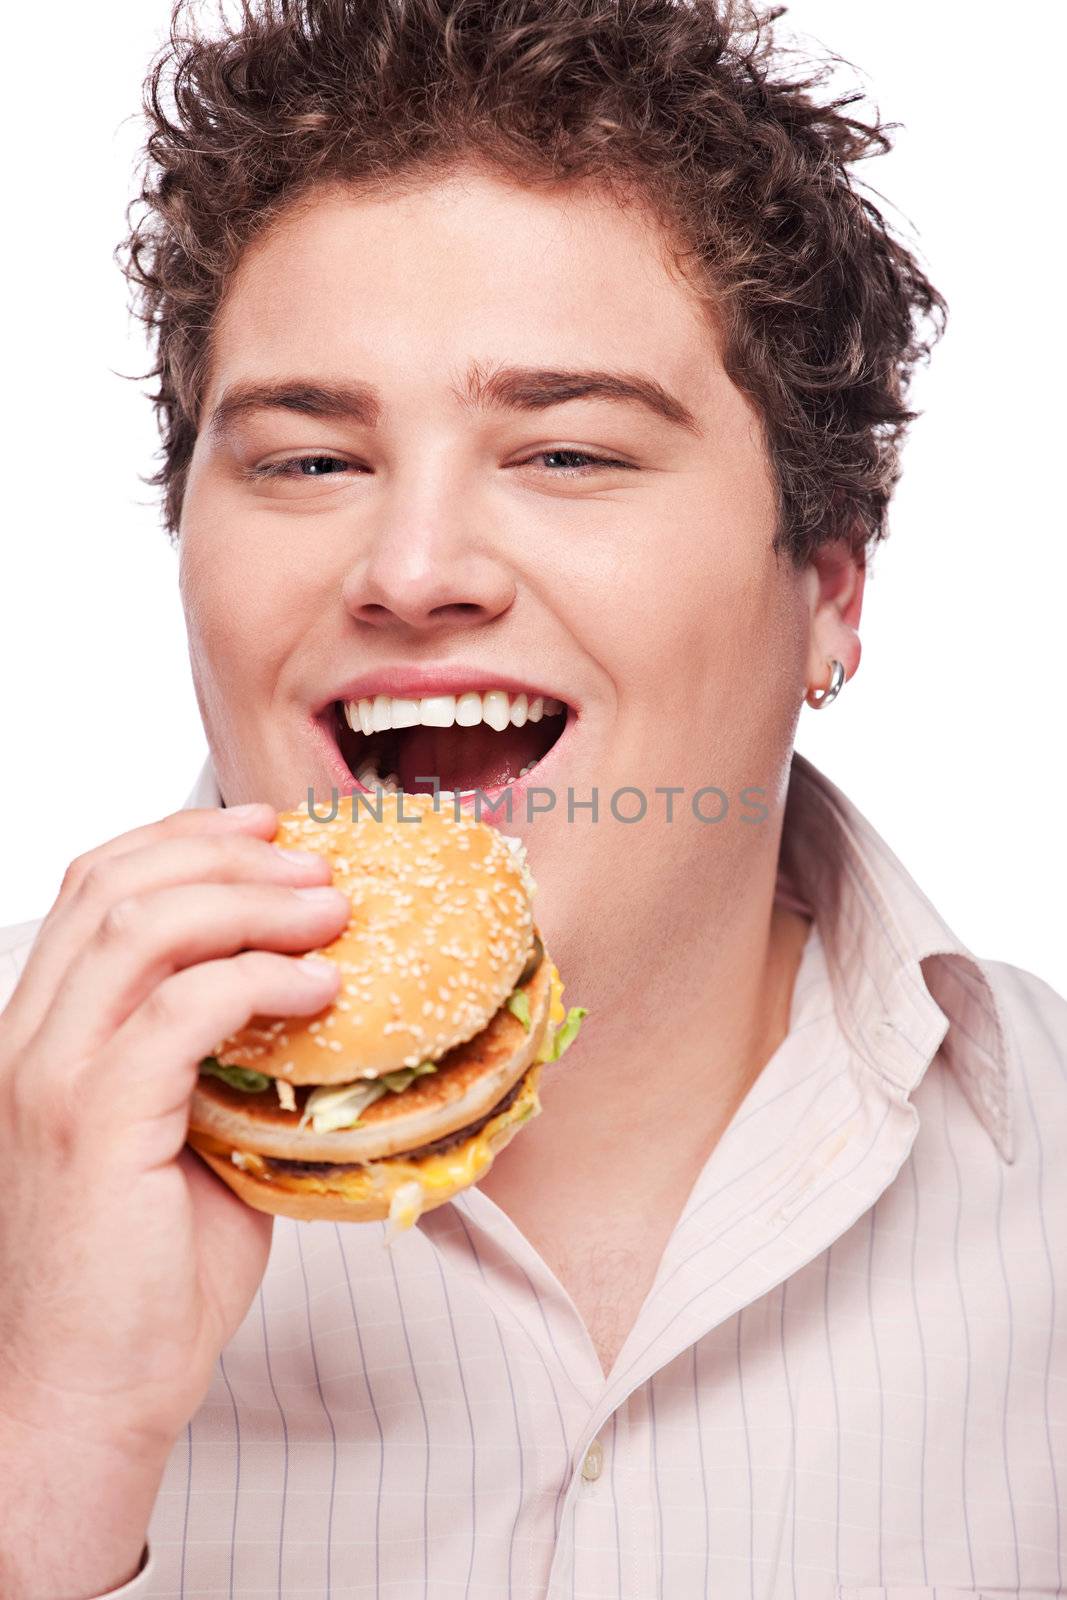 Smiled chubby and hamburger by imarin